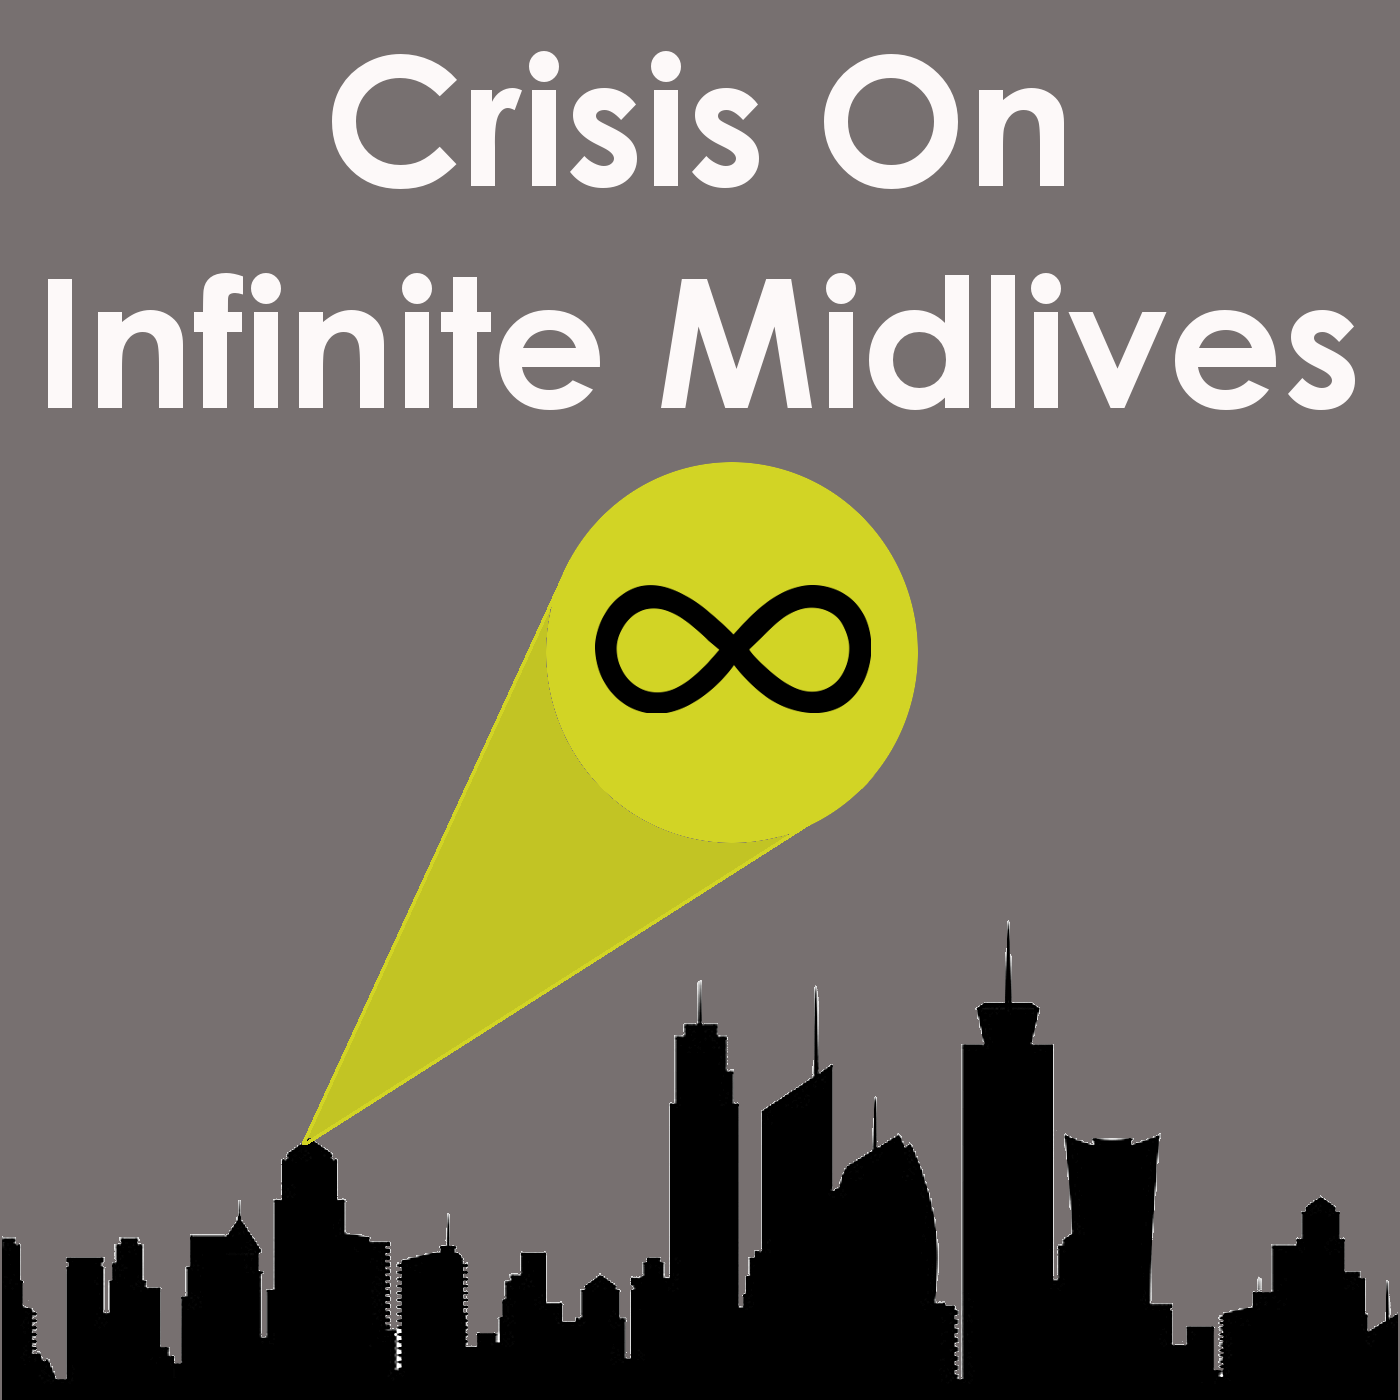 Crisis On Infinite Midlives